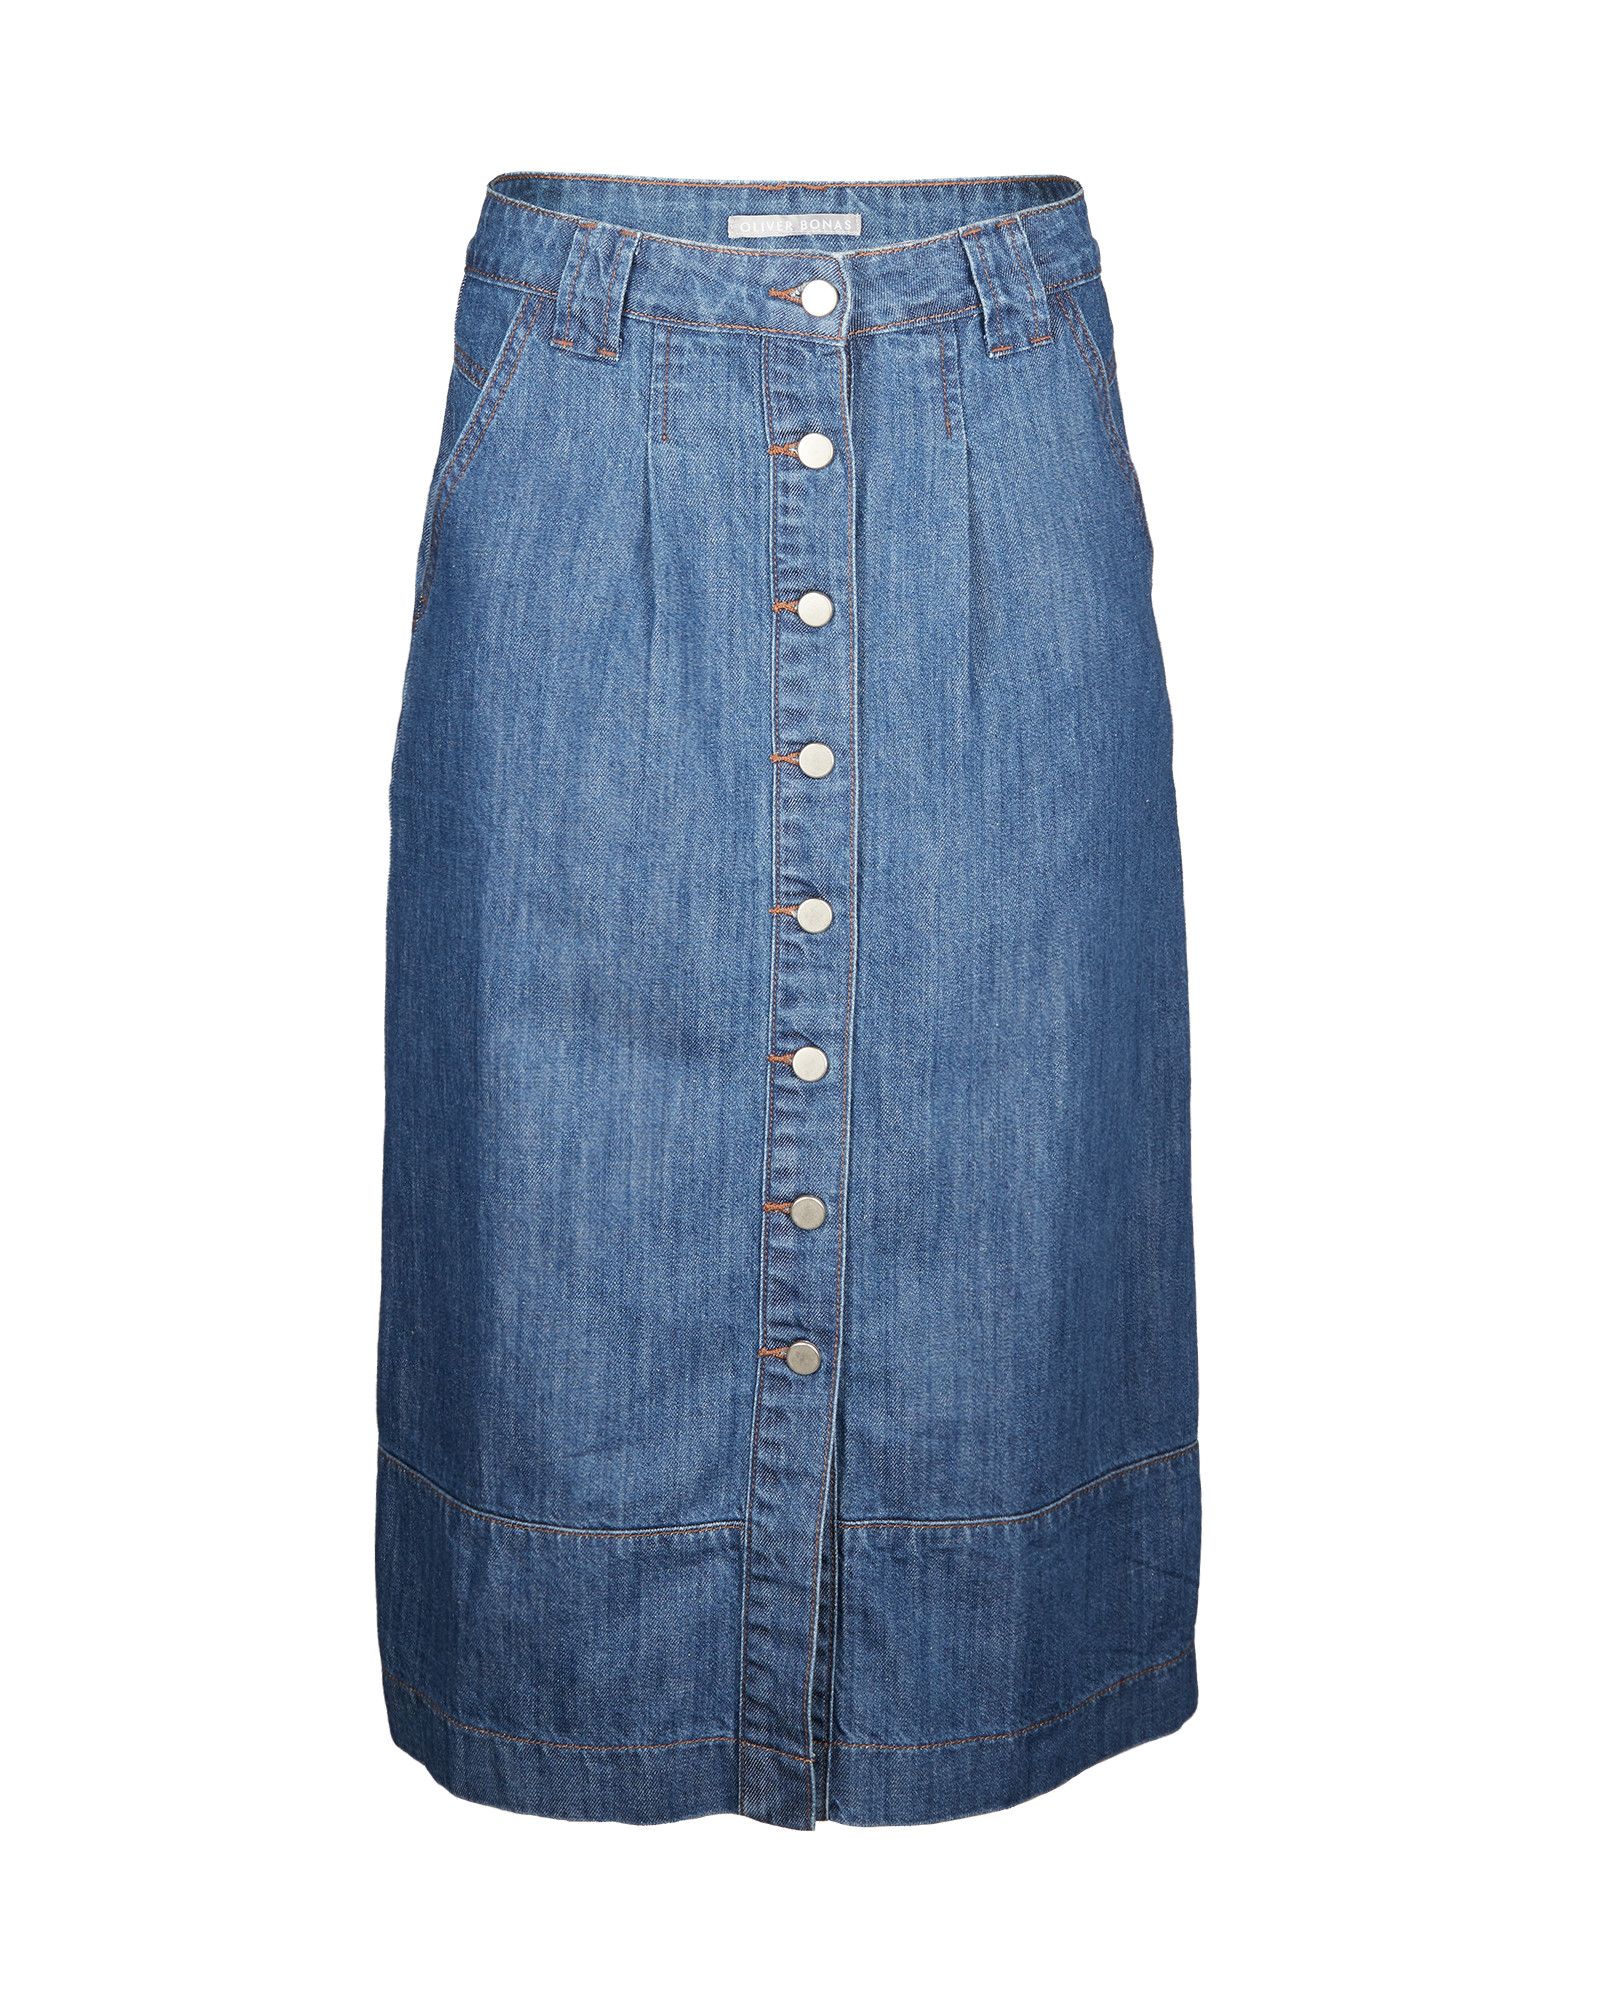 TOPSHOP Moto BLUE Denim MINI Skirt Button Through SIZE 28 UK 10 New With  Tag | eBay